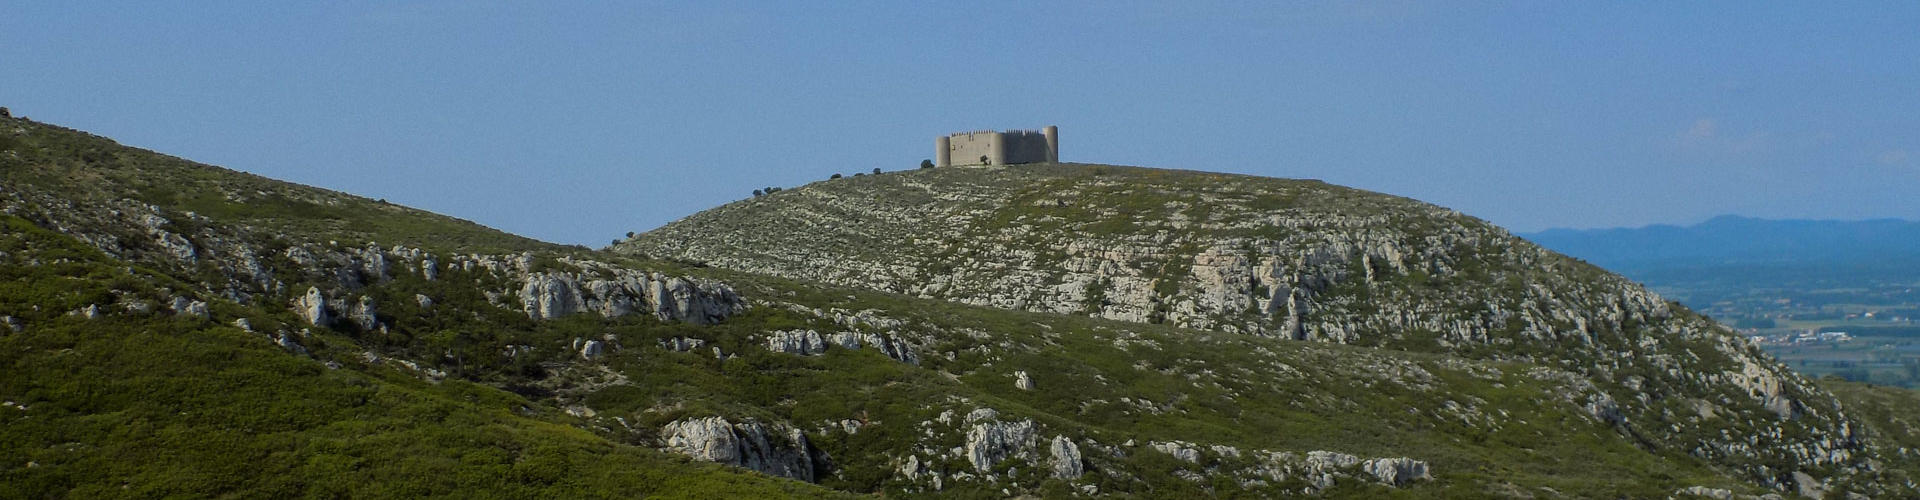 El castell de Montgrí des del puig Roig